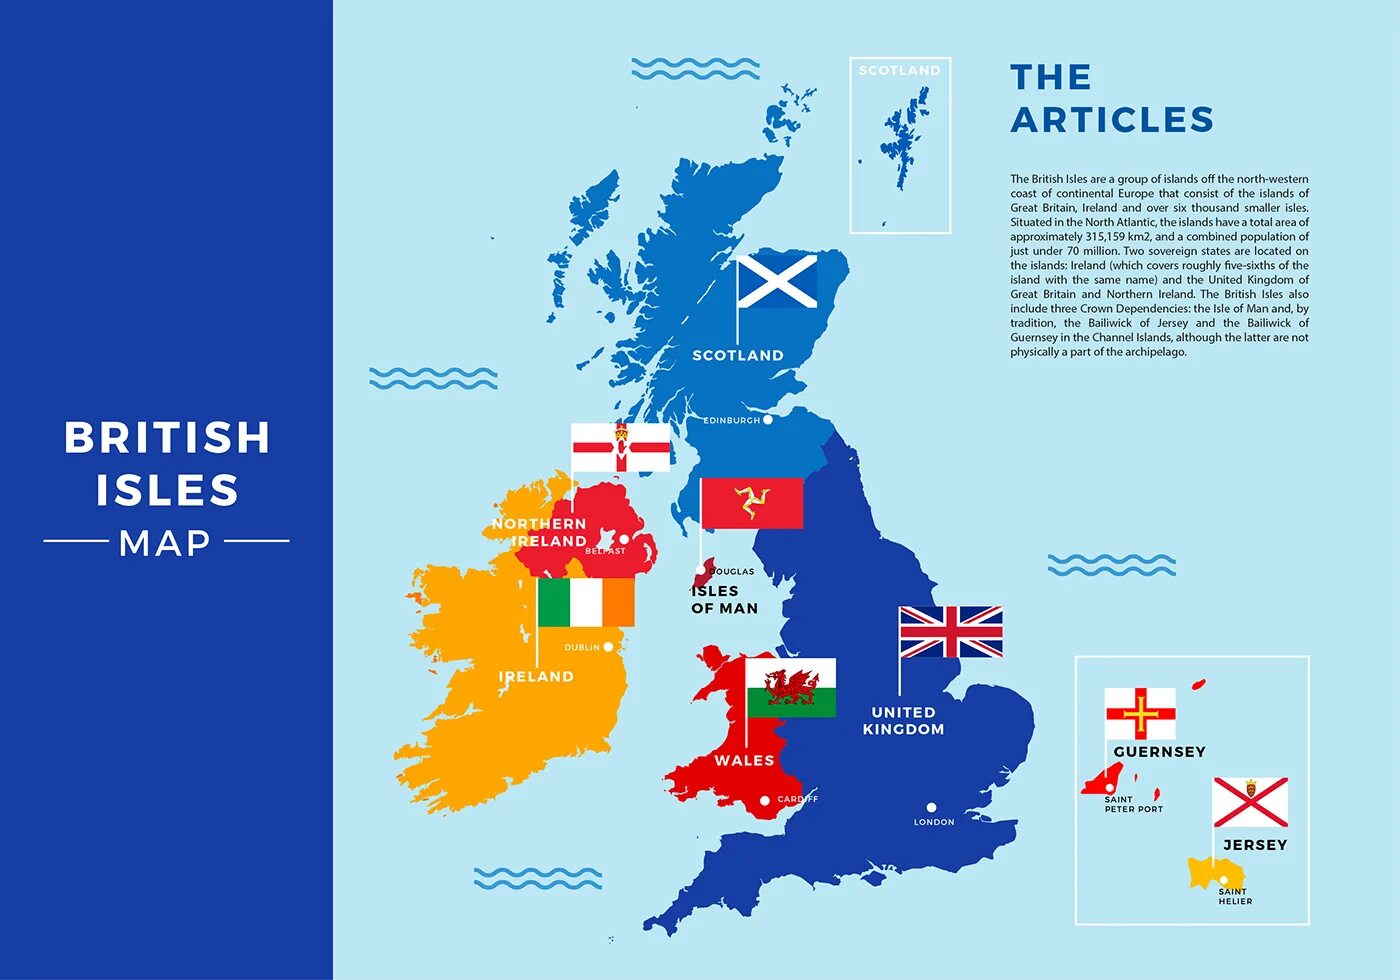 Which part of island of great. Британские острова географическая карта. Great Britain острова. Британские острова на карте. Расположение британских островов.